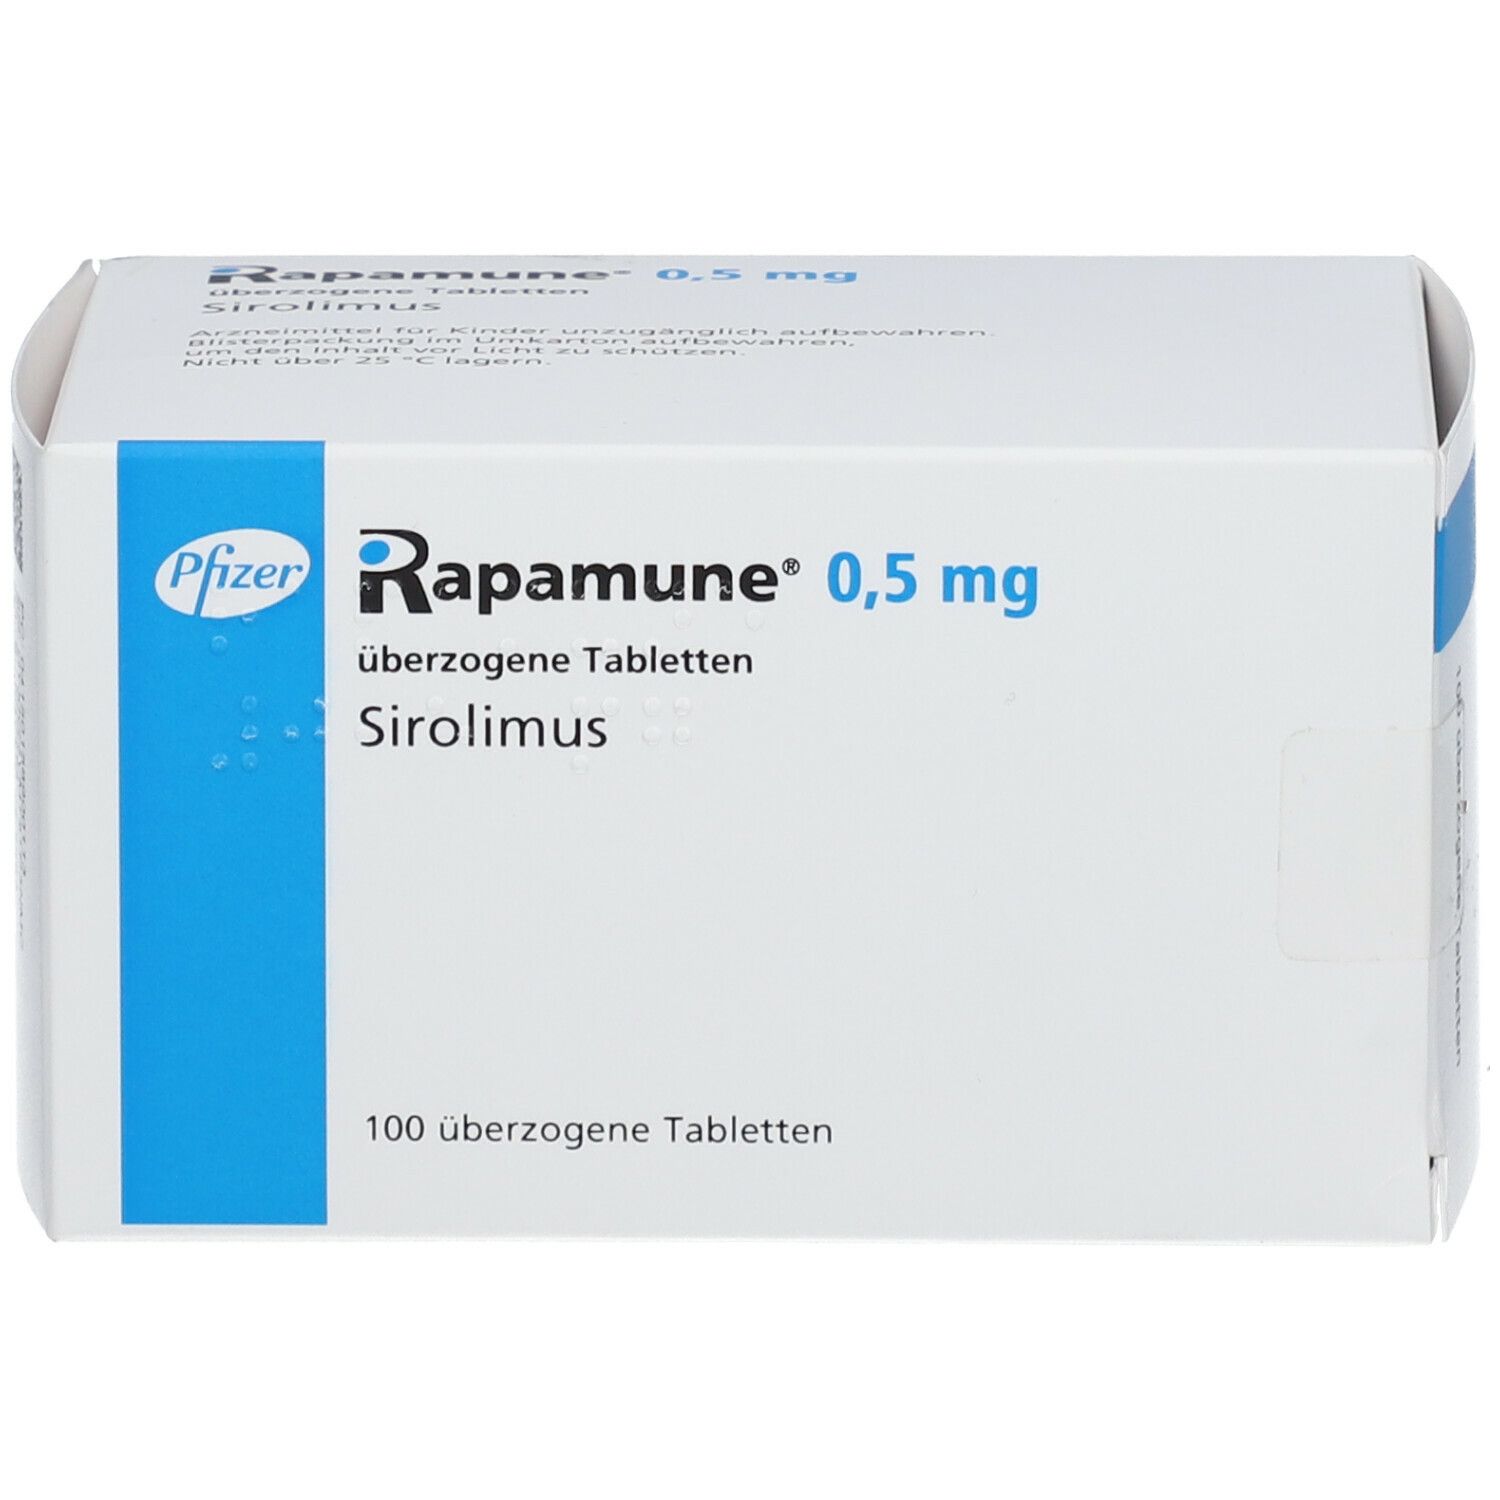 Rapamune 0,5 mg